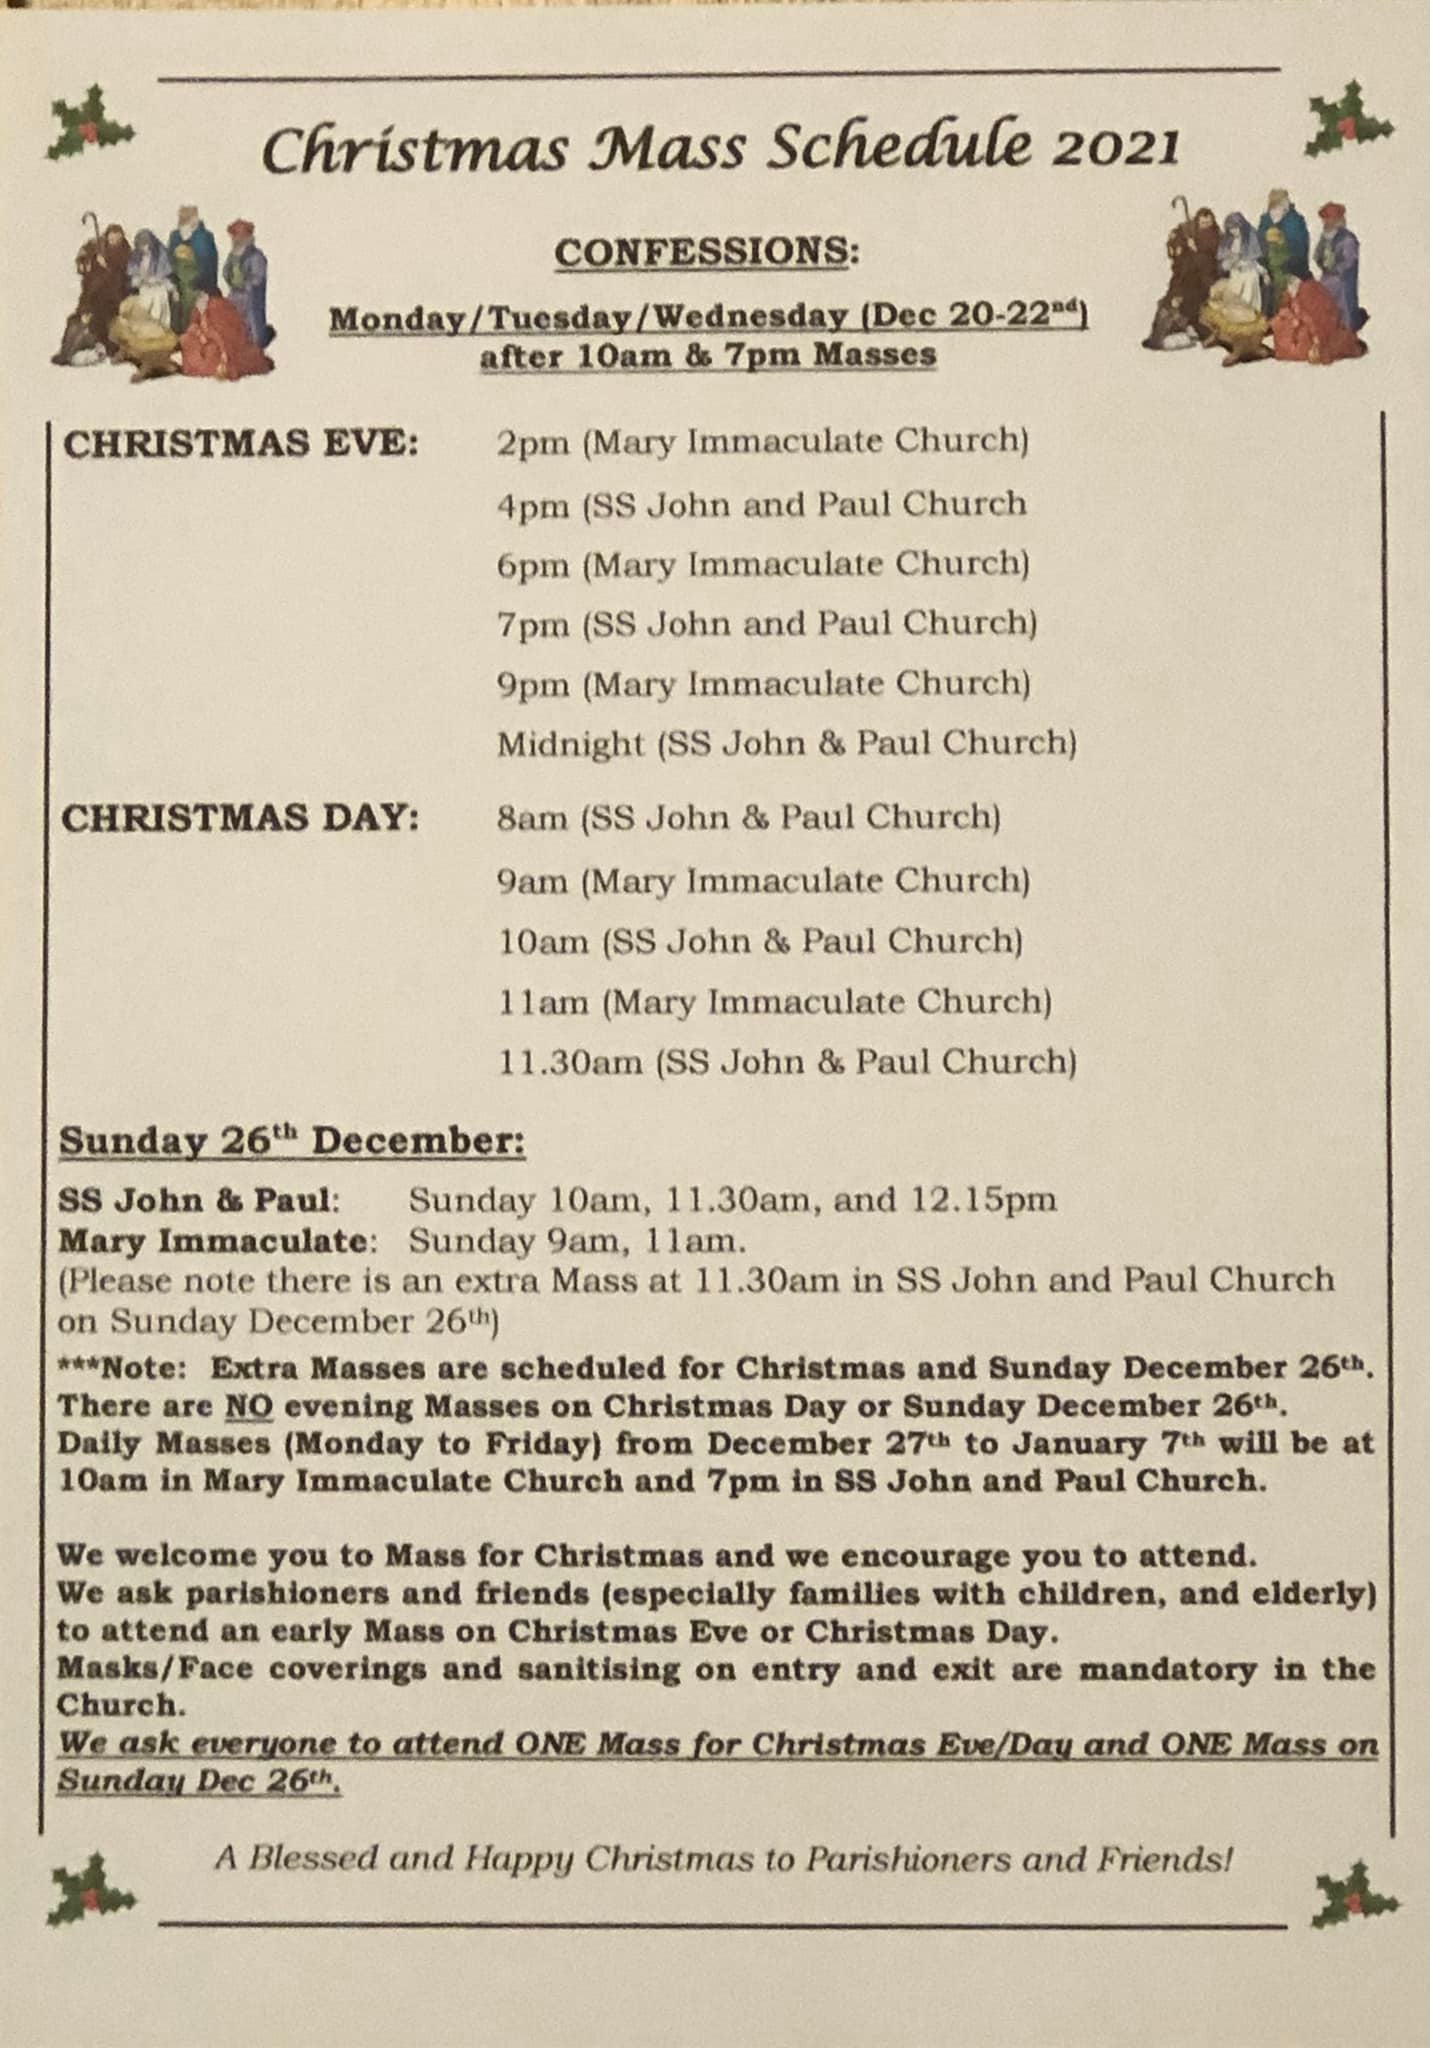 Mass Schedule for Christmas 2021 - St Senan's Parish, Shannon